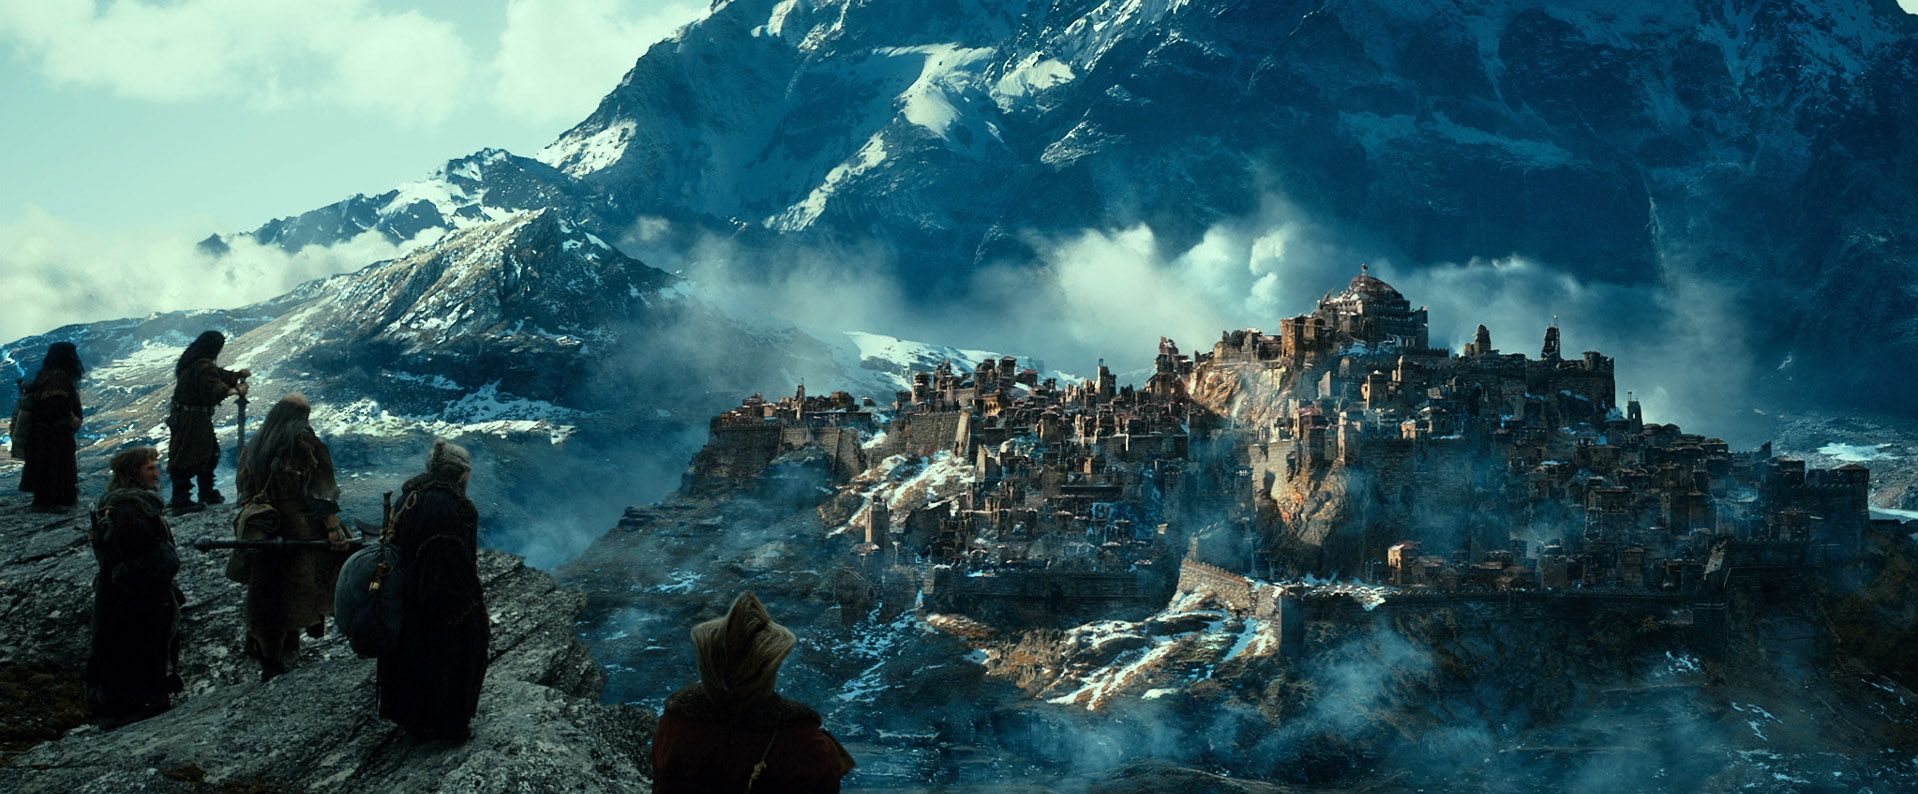 The Hobbit: The Desolation of Smaug Photo 2